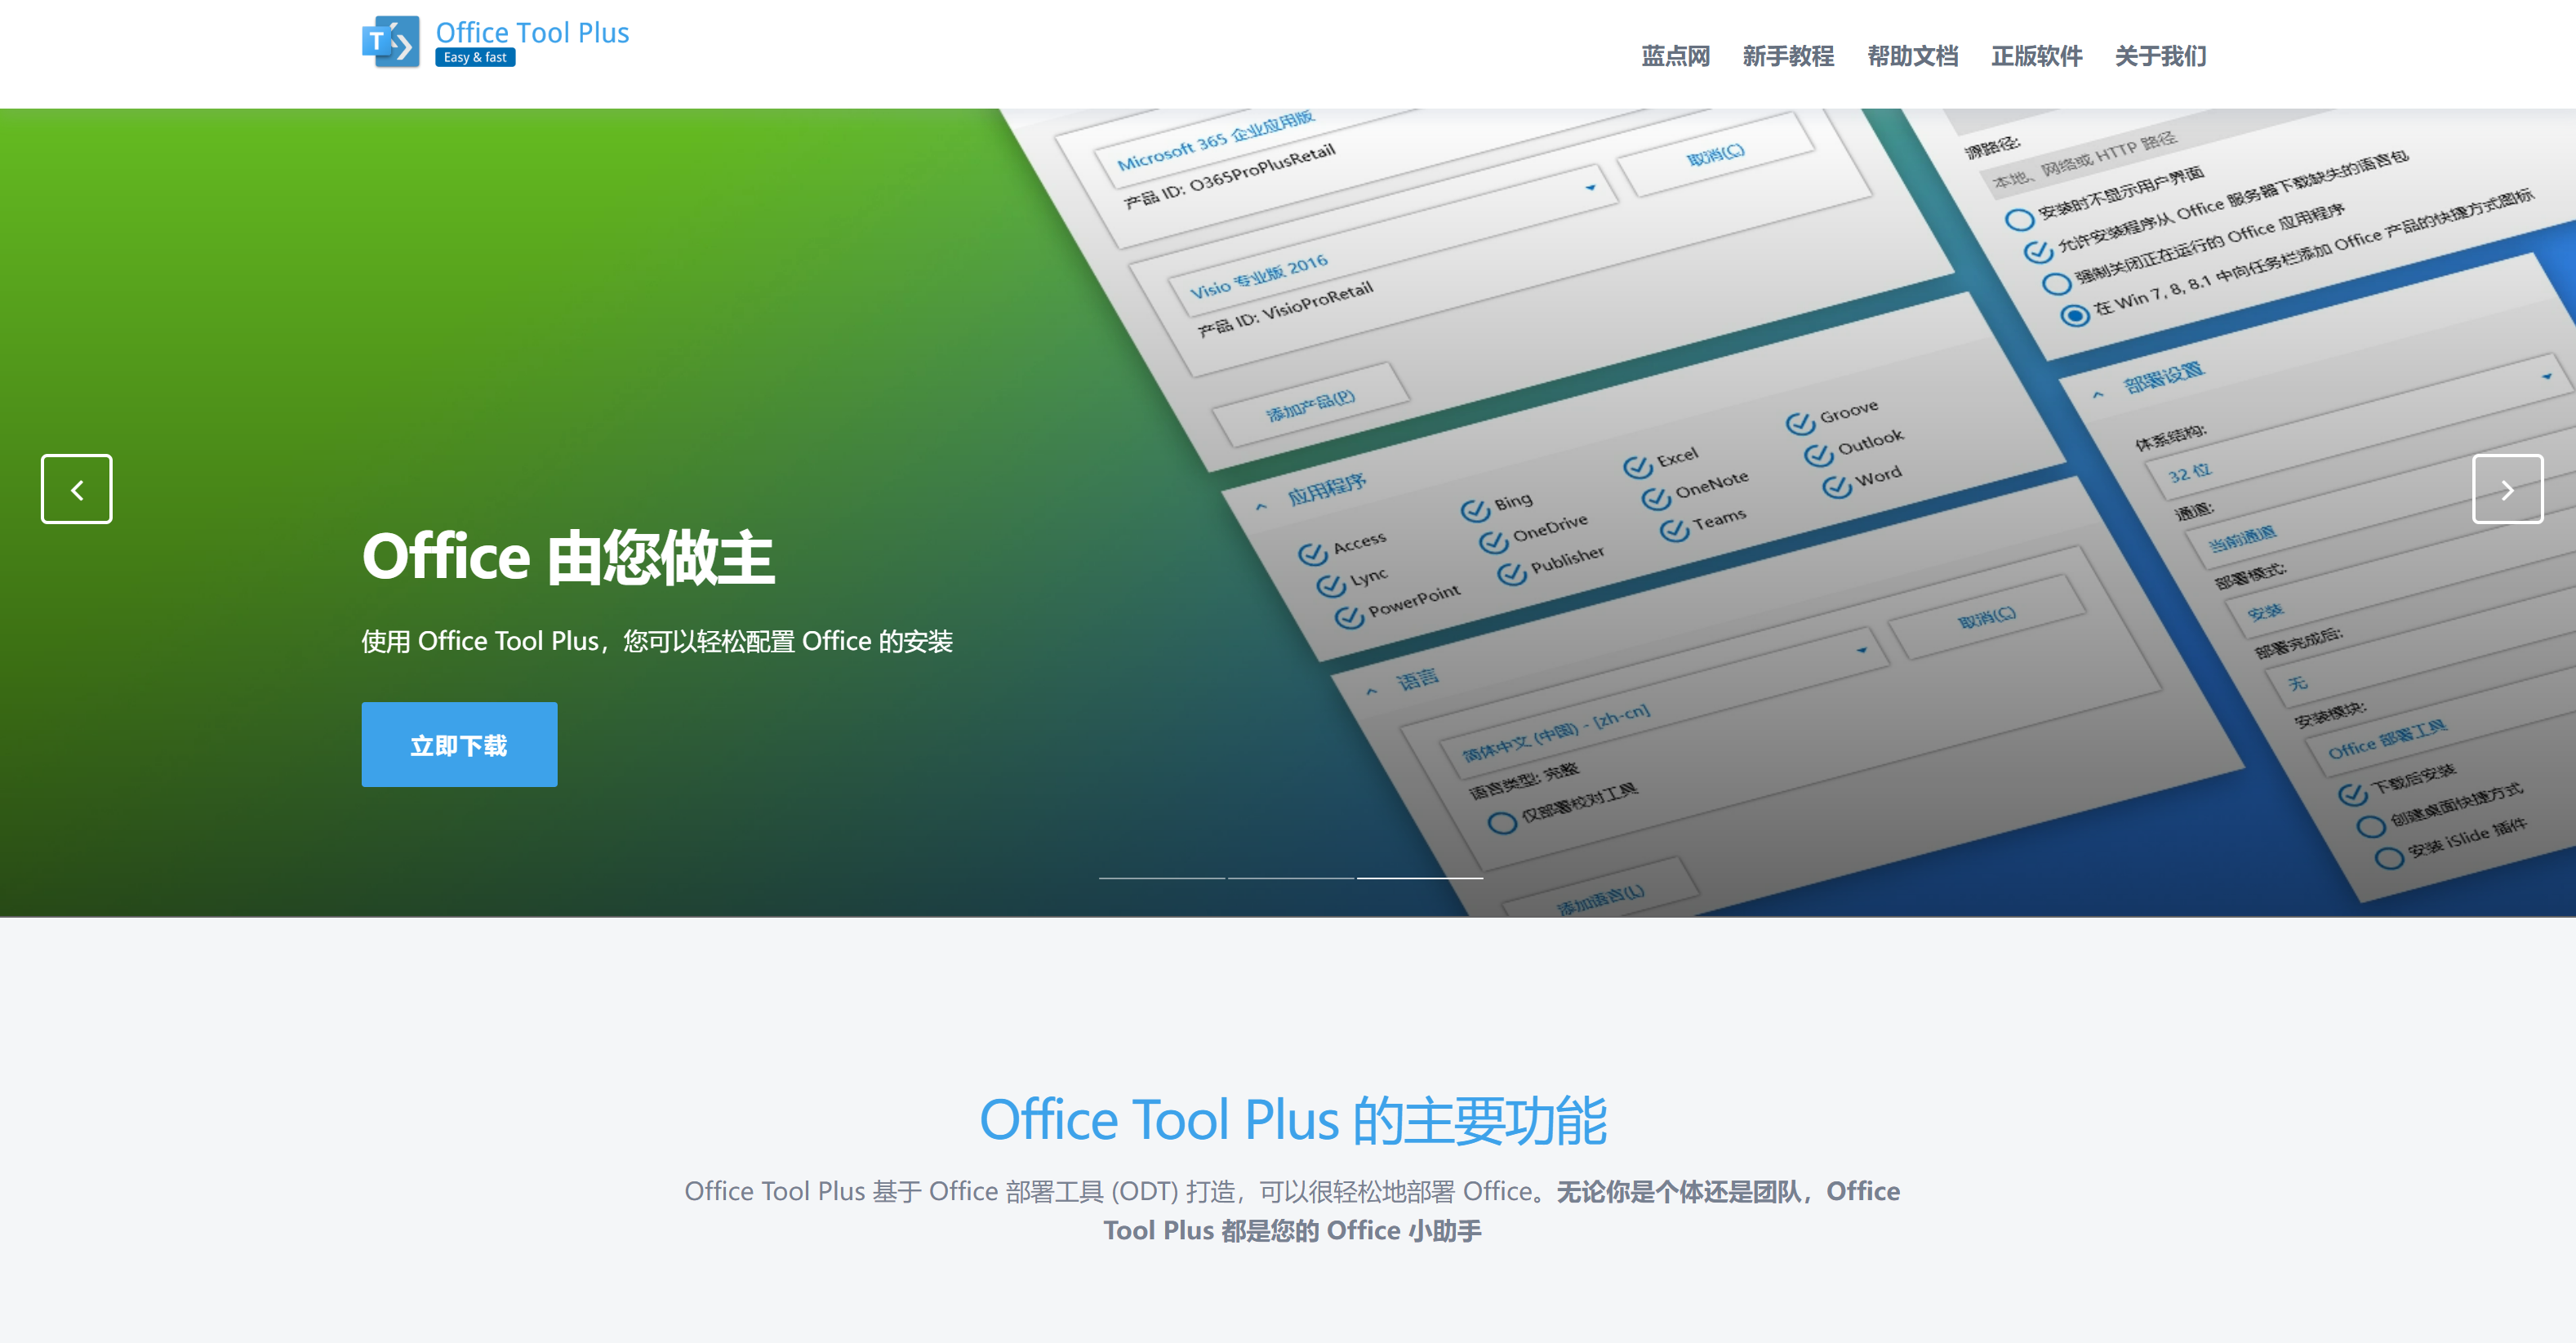 Office Tool Plus -  一键部署 Office